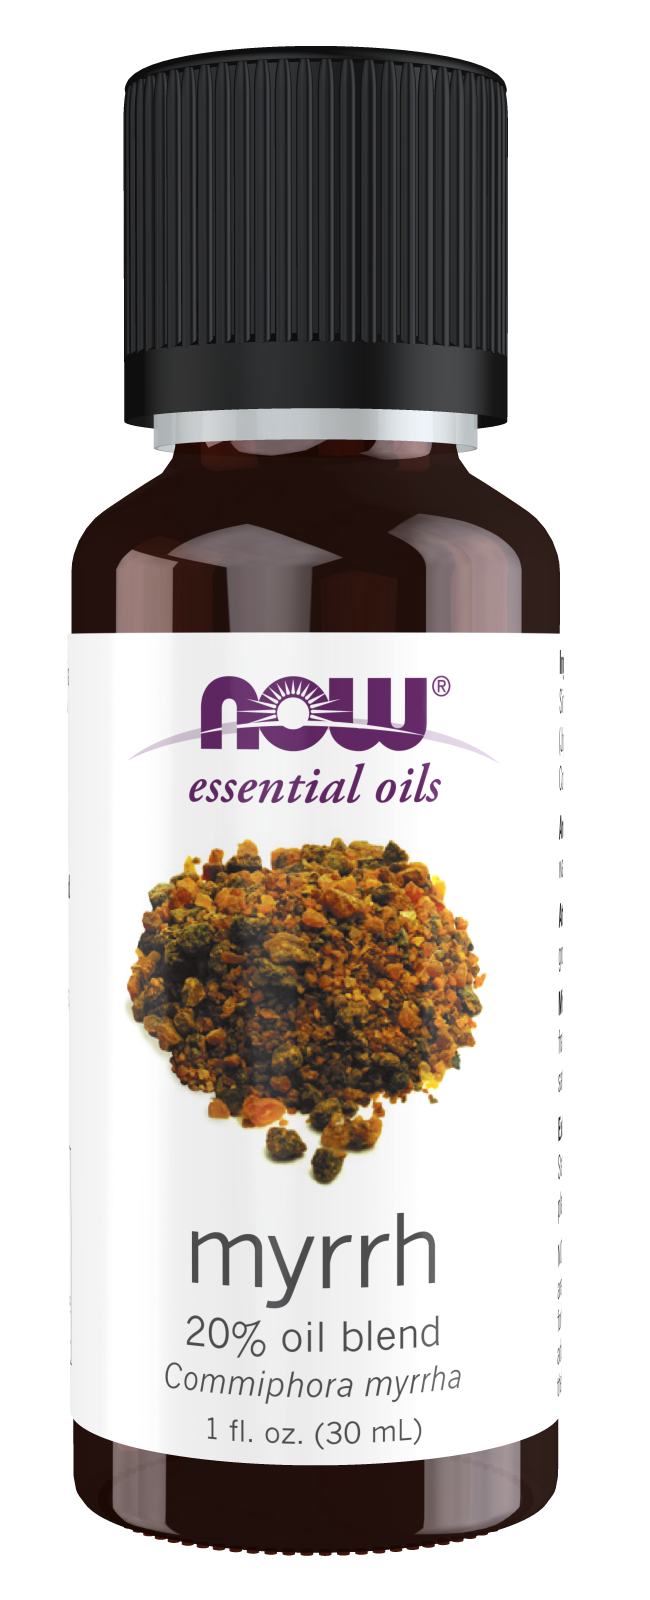 SOiL  Essential Oil Blends - may-rah-kee